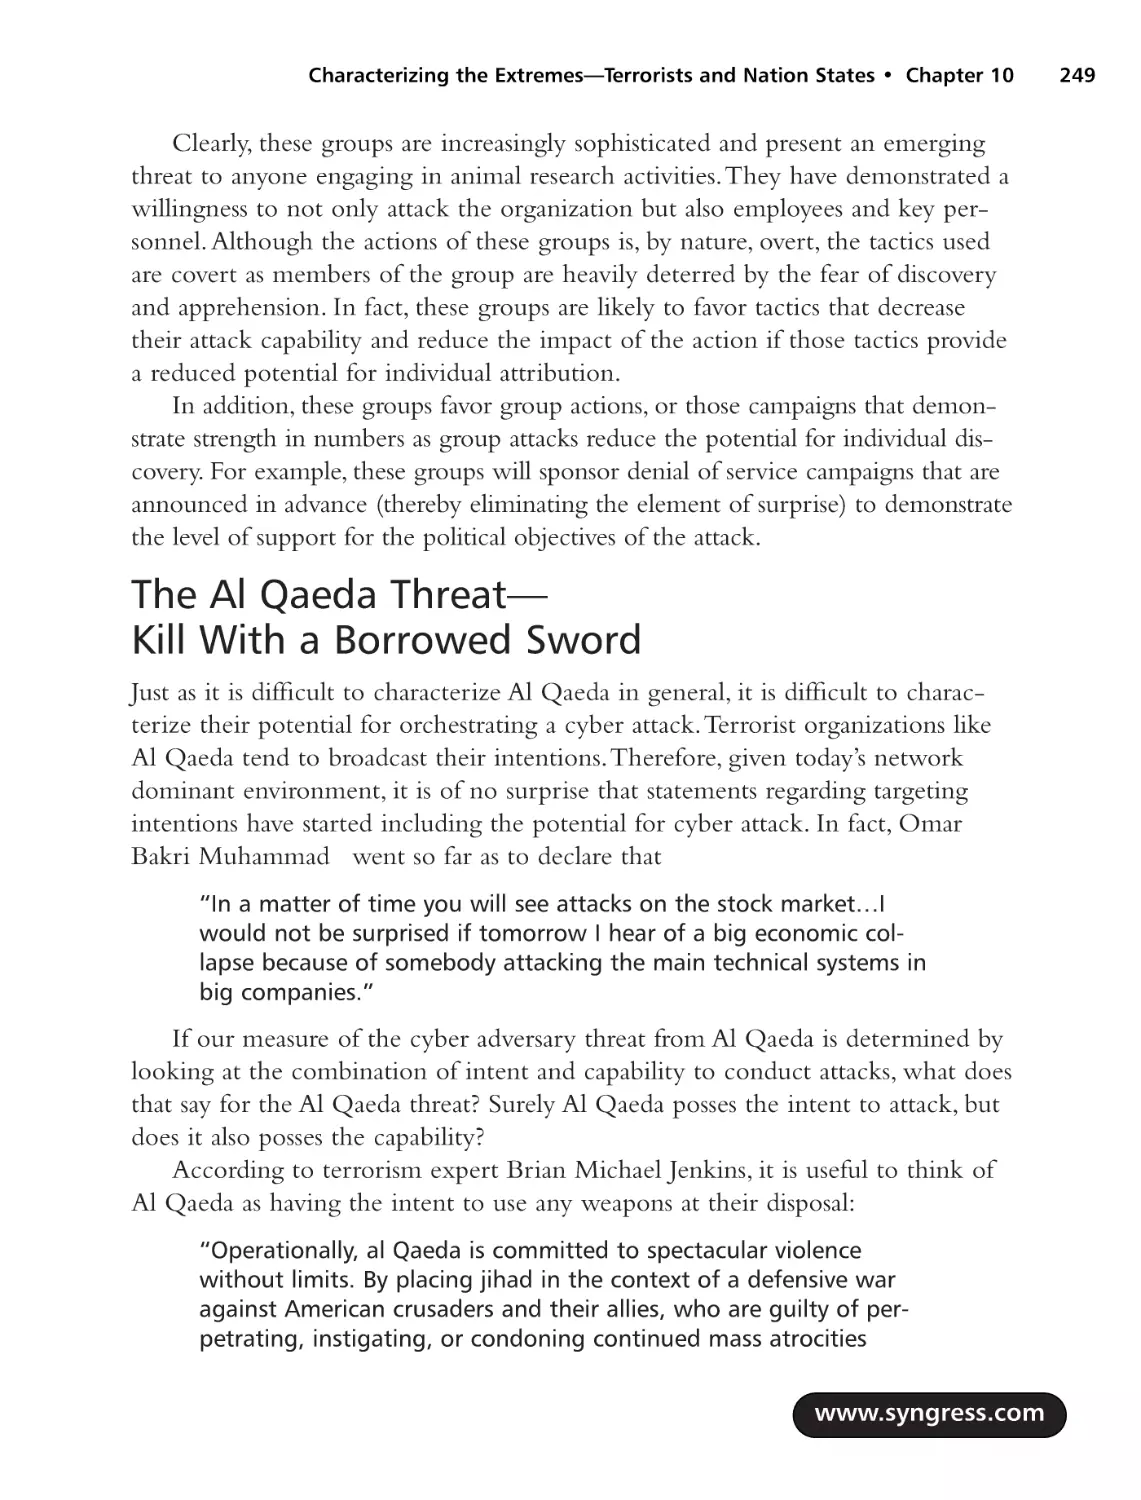 The Al Qaeda Threat-Kill With a Borrowed Sword